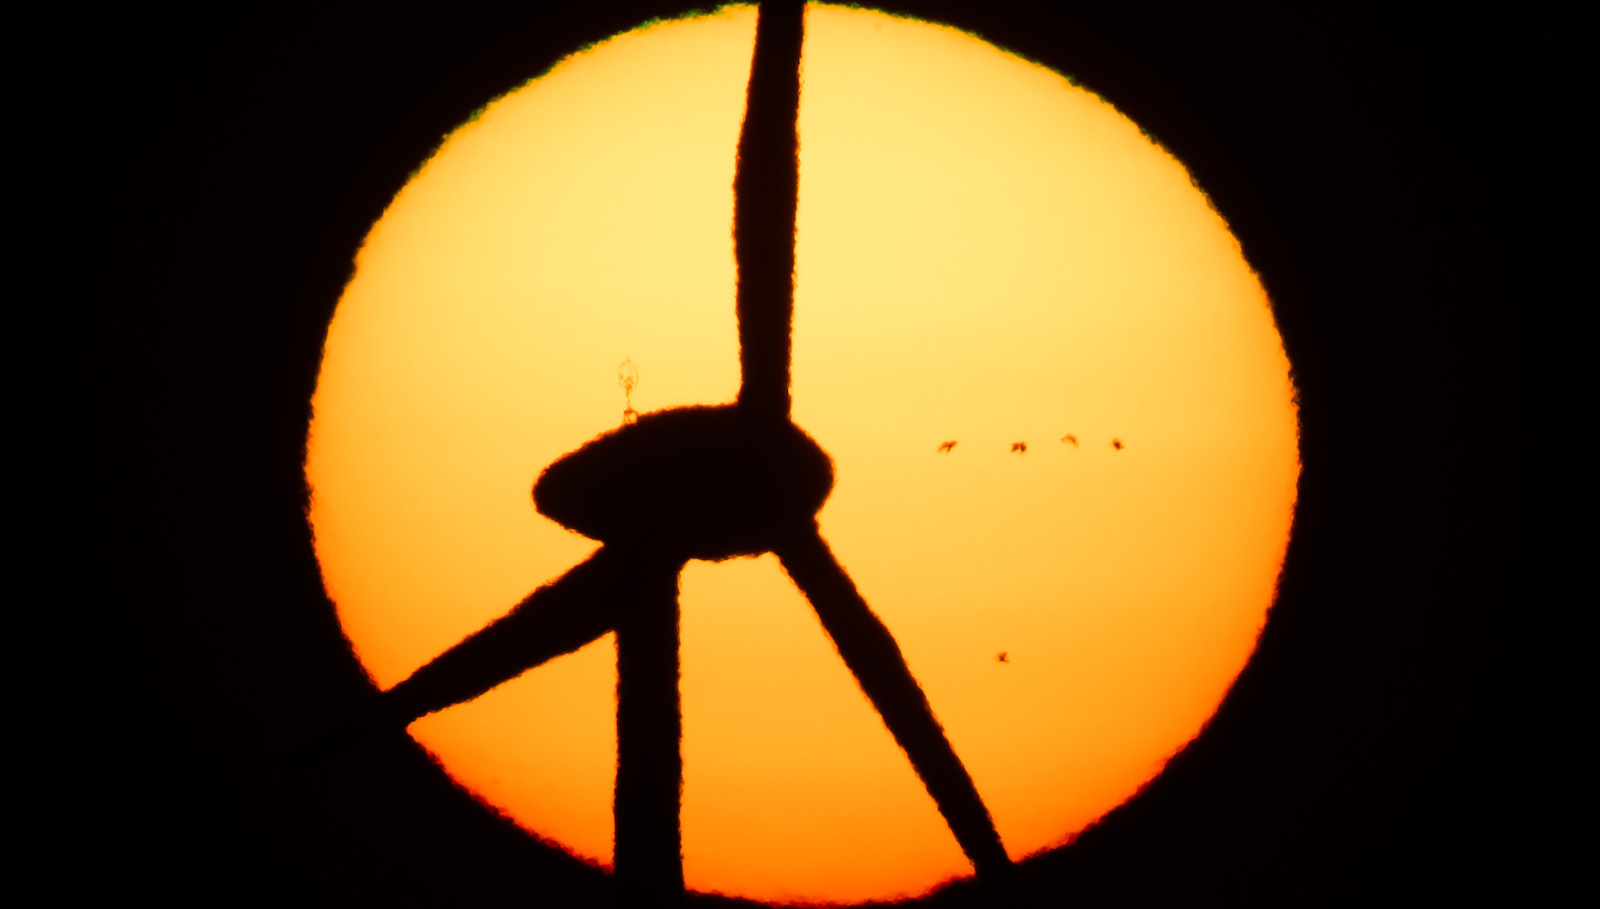 silhouette of a wind turbine